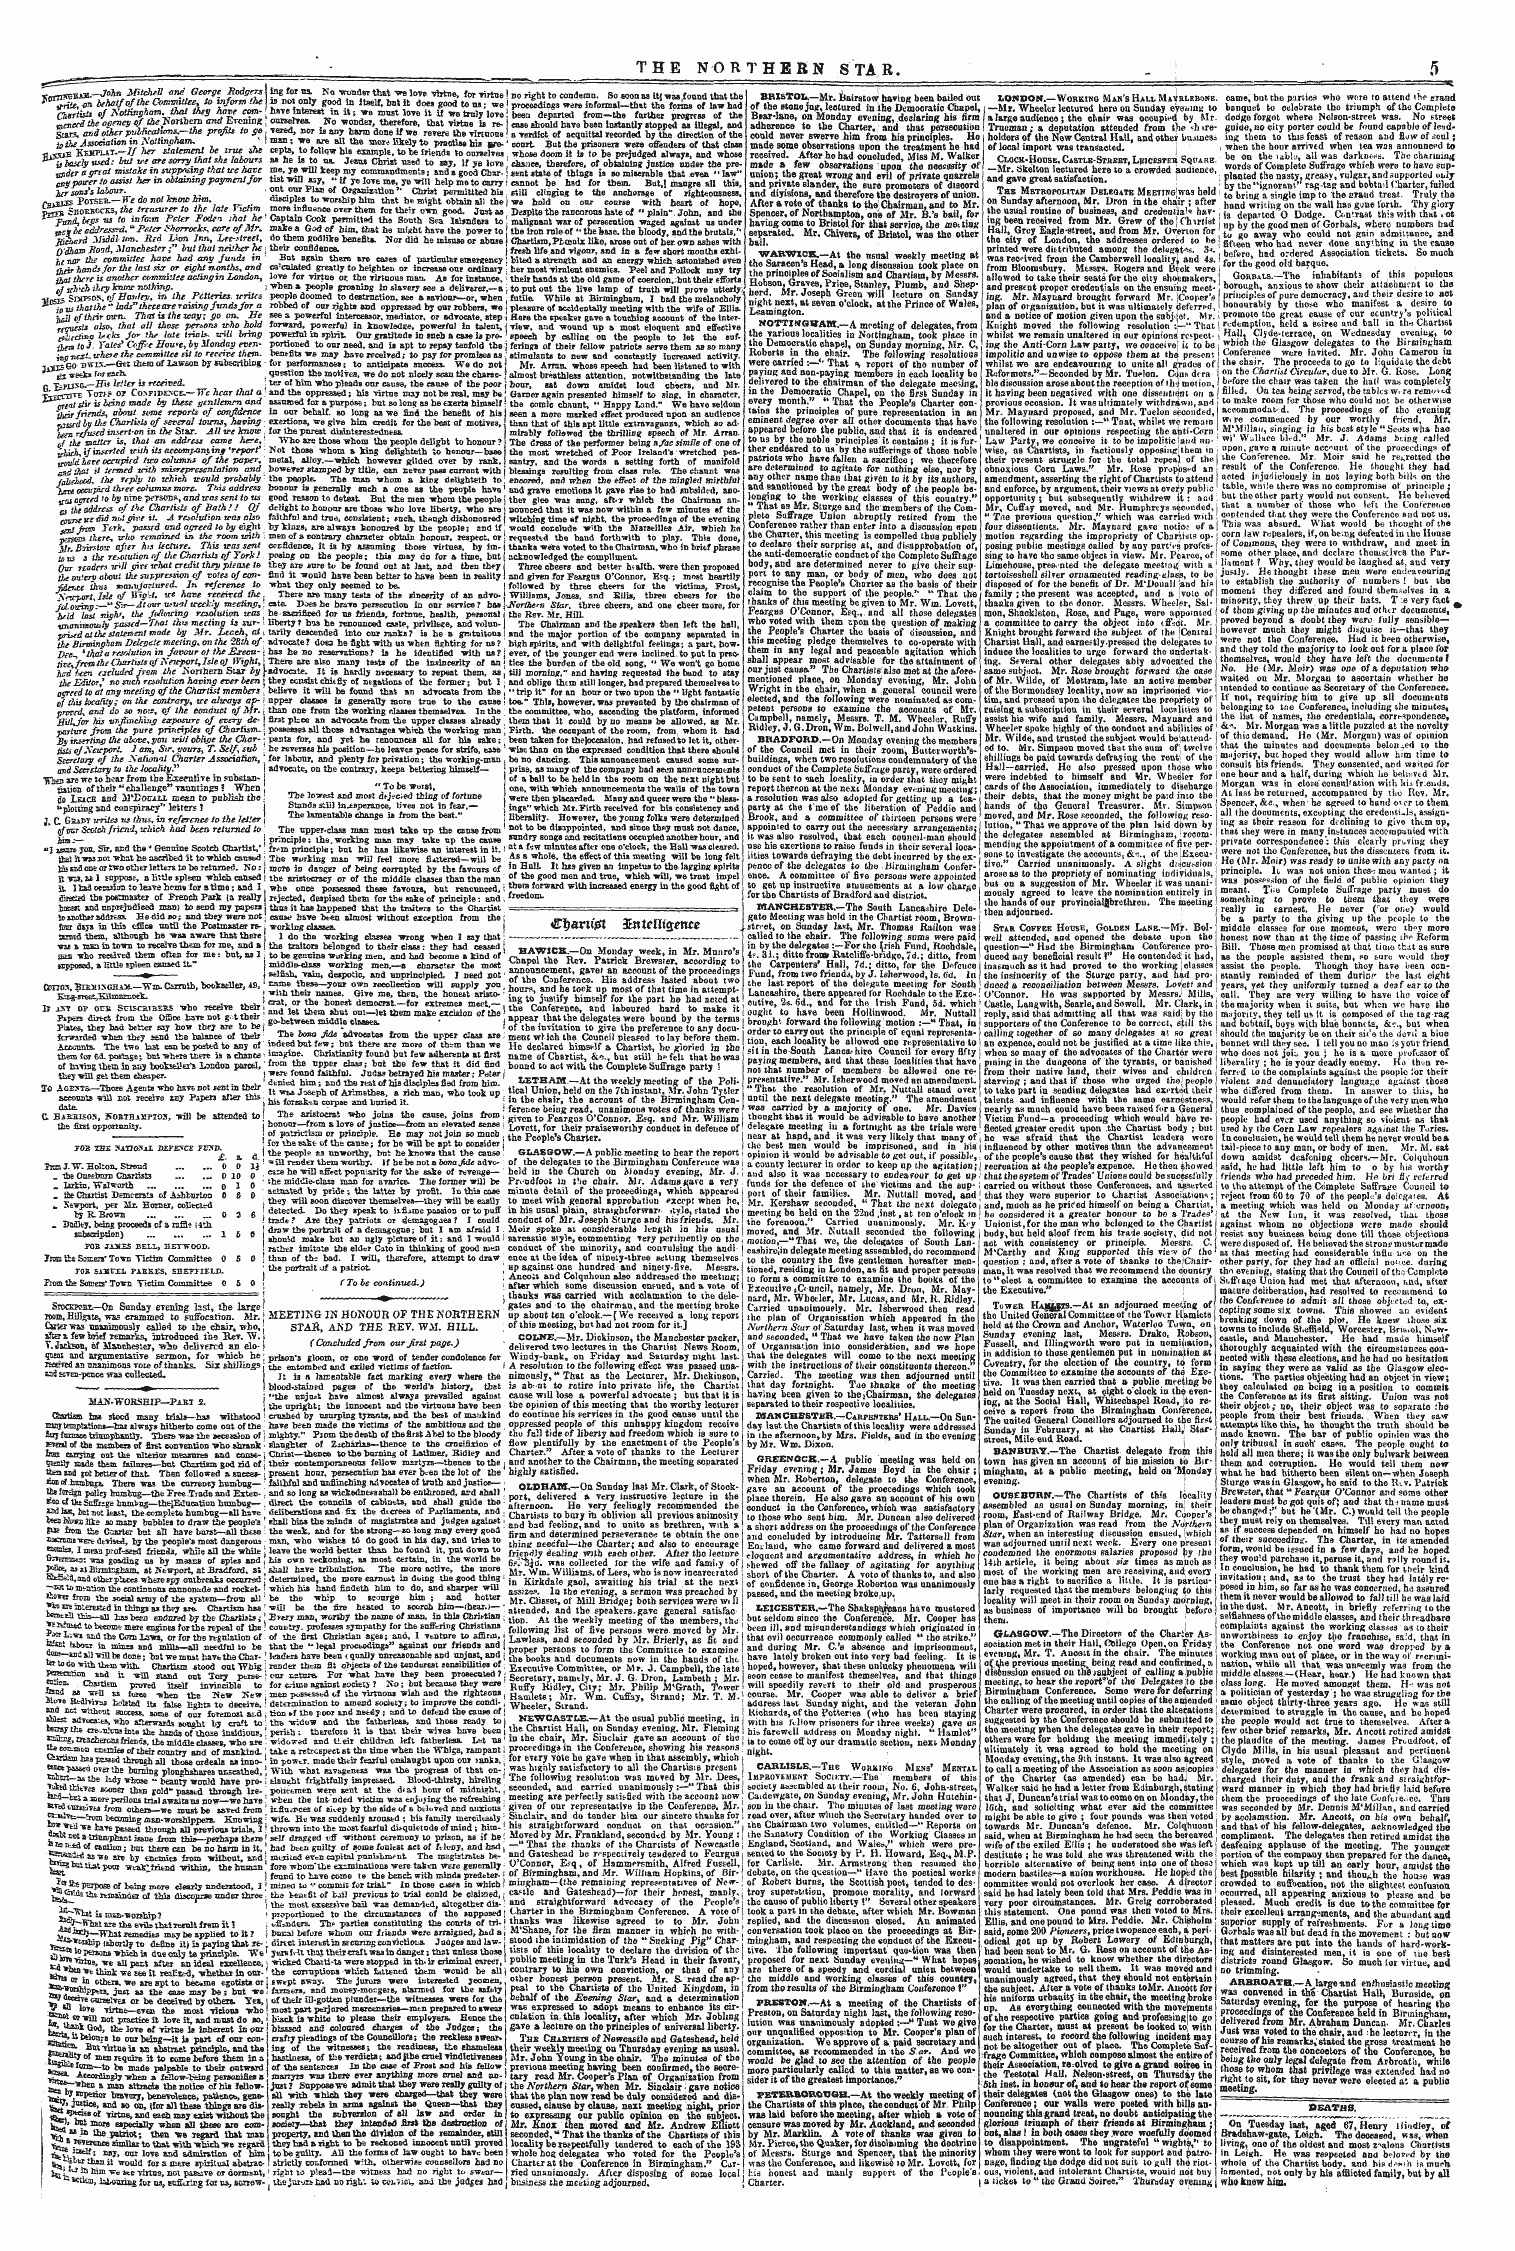 Northern Star (1837-1852): jS F Y, 4th edition - Srockpoat—On Sundav Evening I25i, Tbe Large